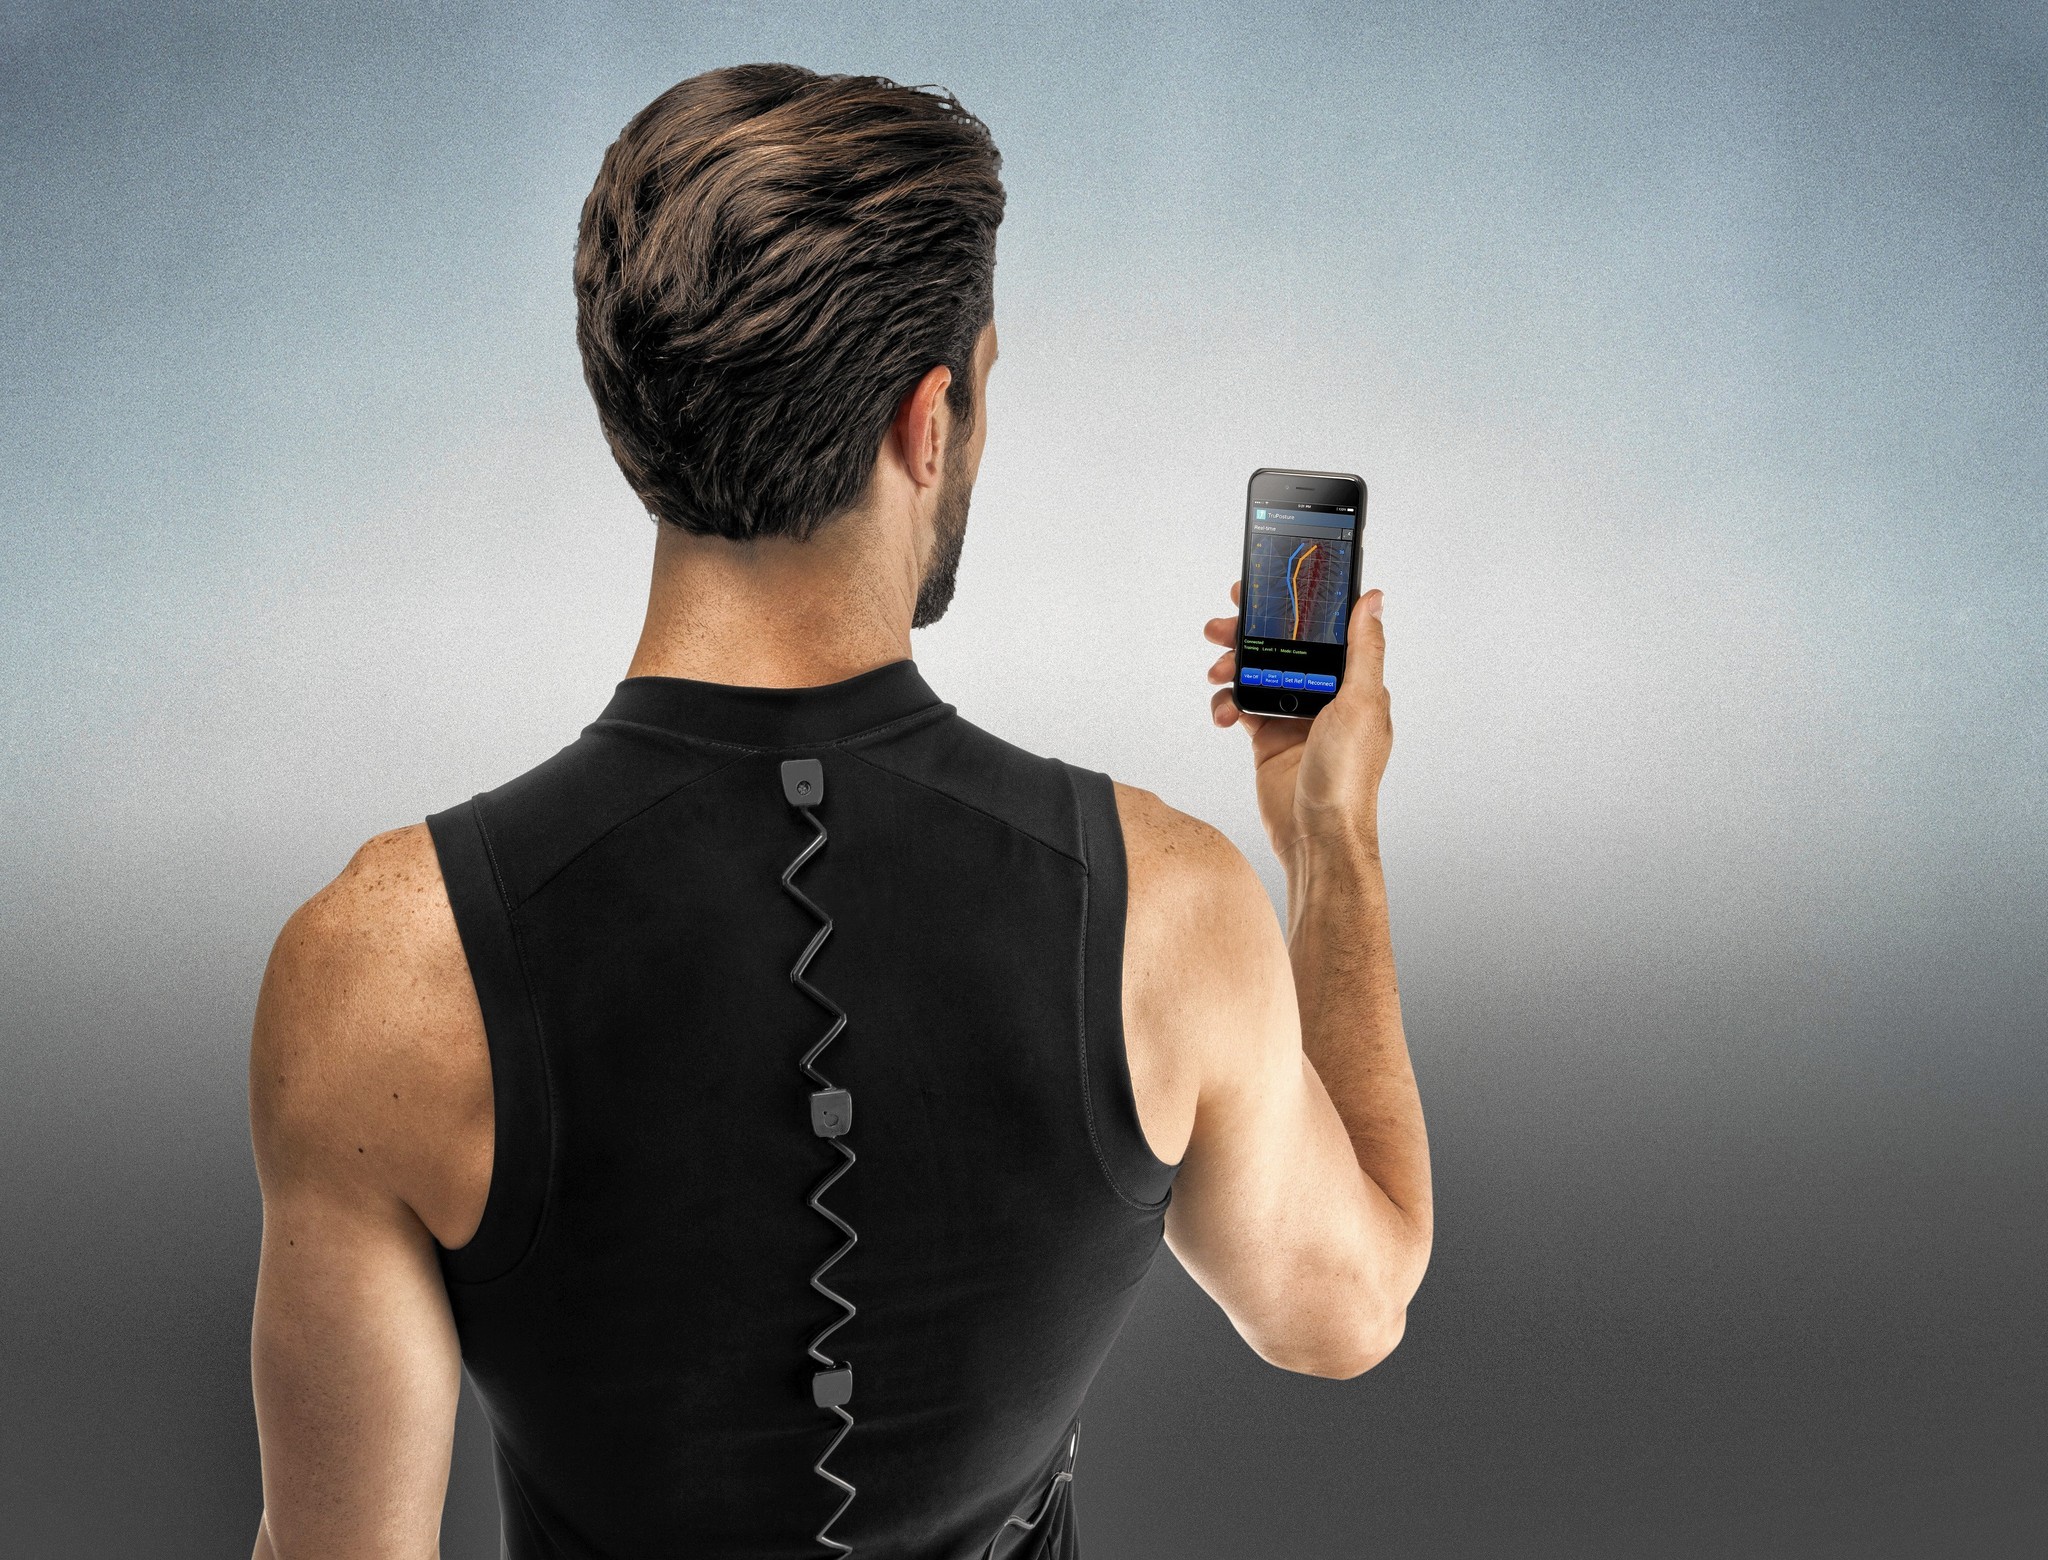 Smart shirt monitors posture, sends correcting alerts